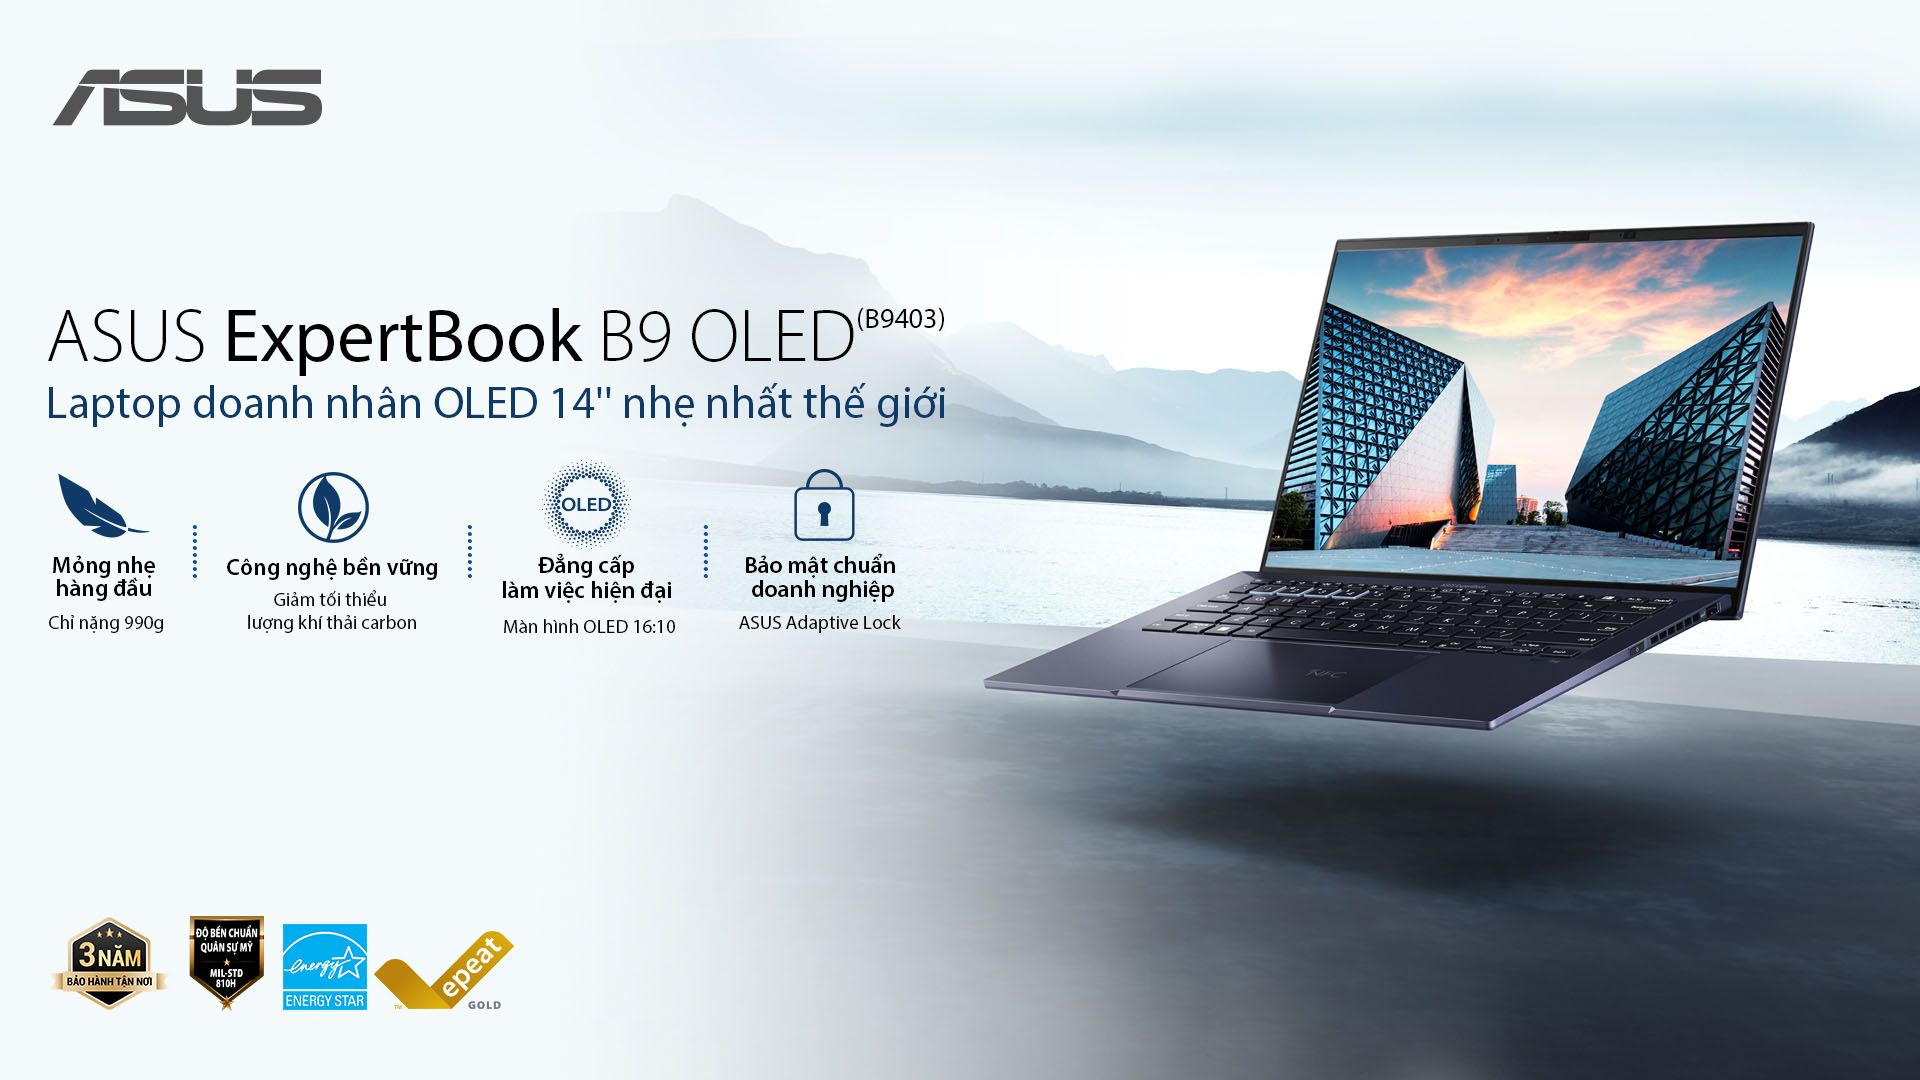 ASUS giới thiệu ExpertBook B9 OLED – Laptop doanh nhân 14” OLED nhẹ nhất thế giới